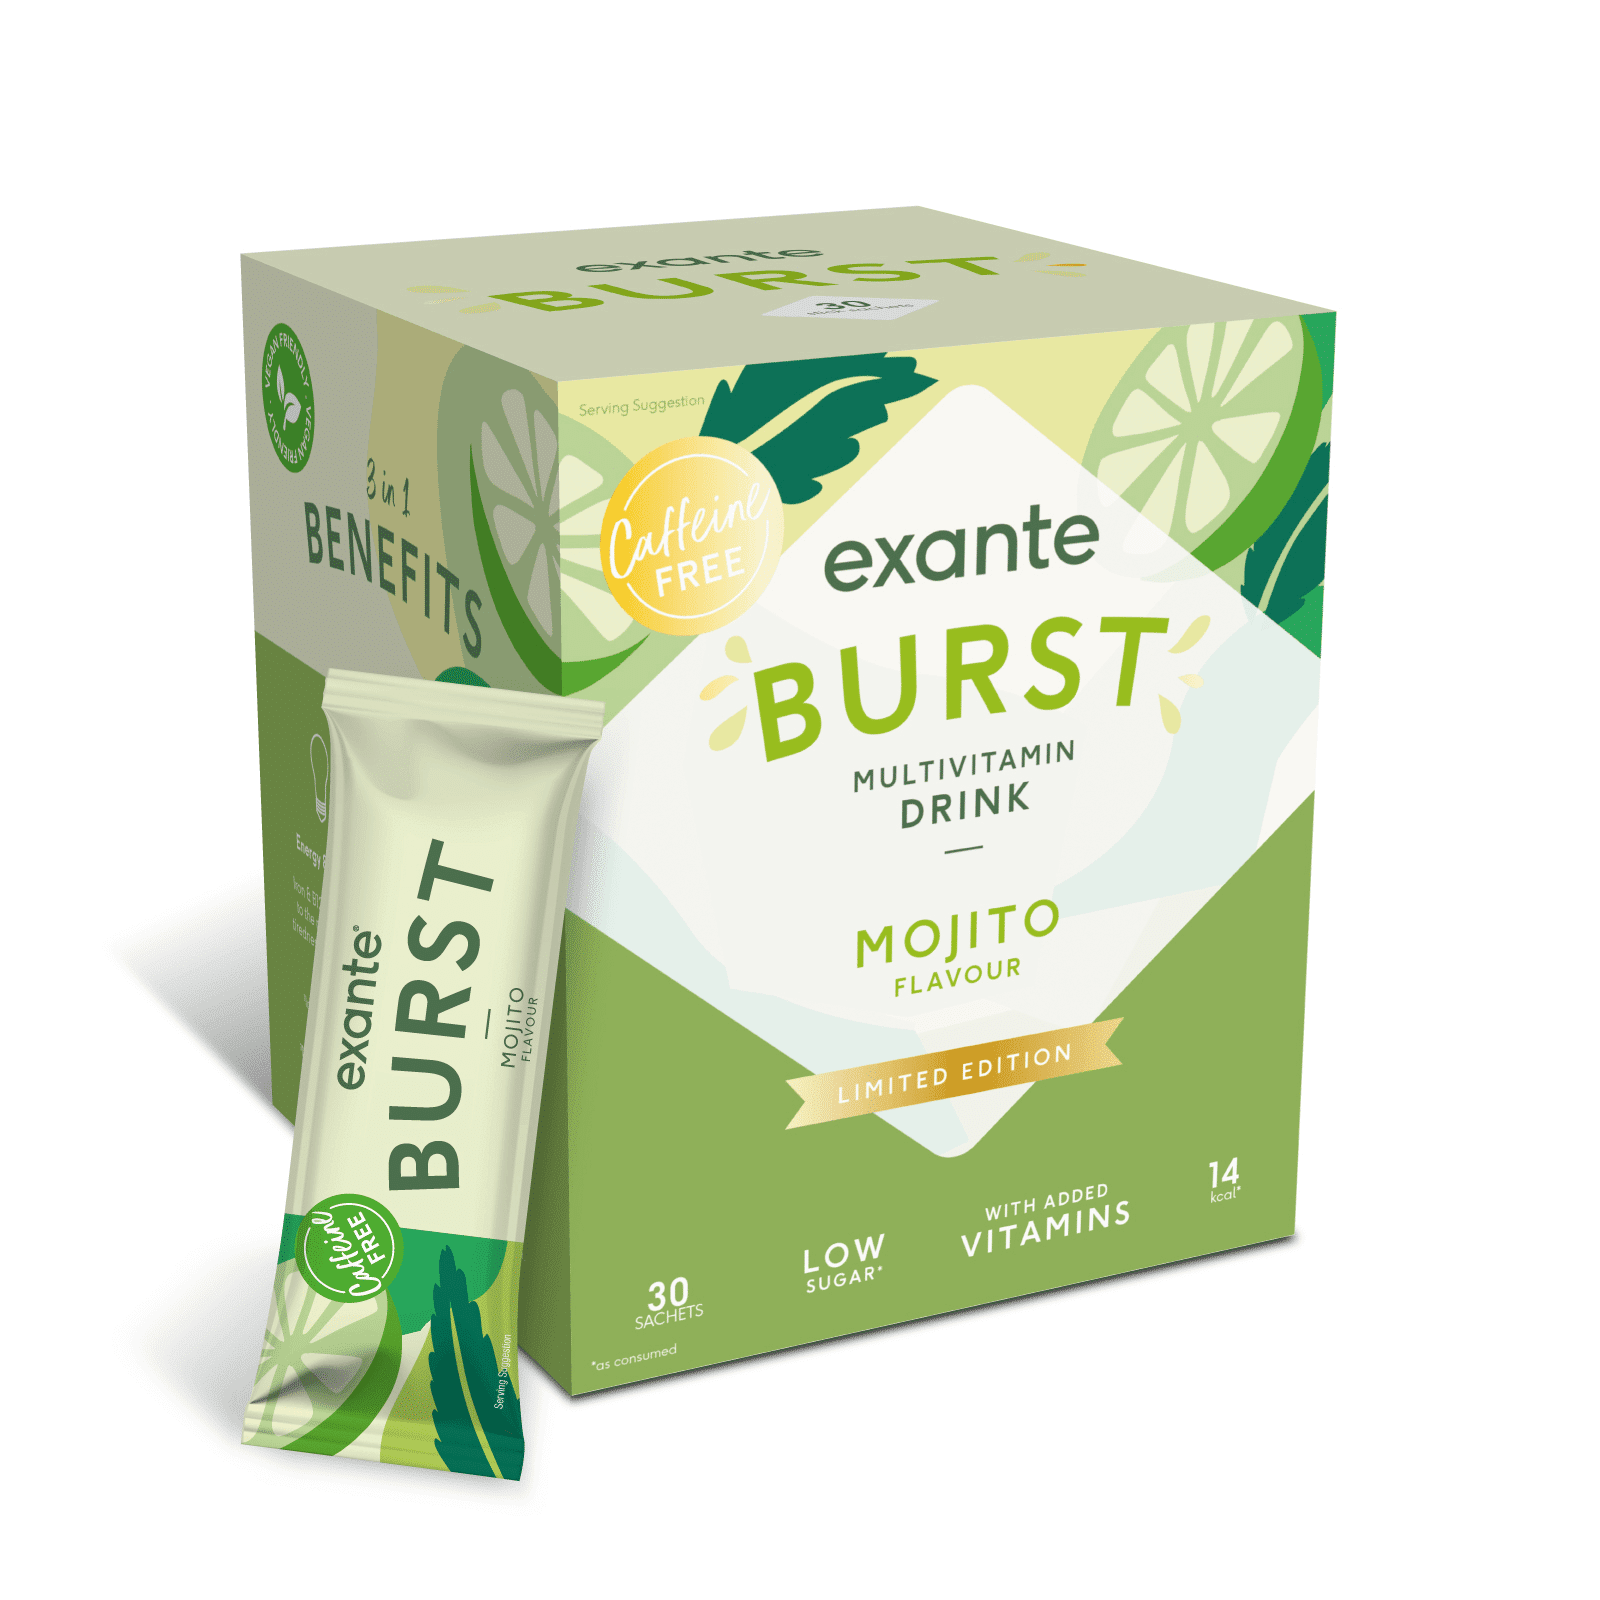 Exante Diet Limited Edition Mojito BURST Box of 30